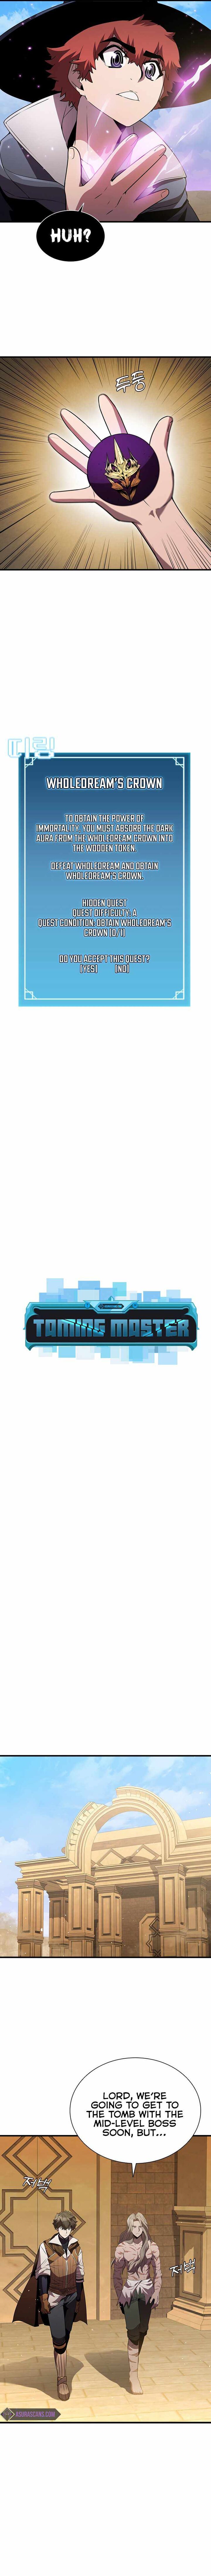 taming_master_76_2